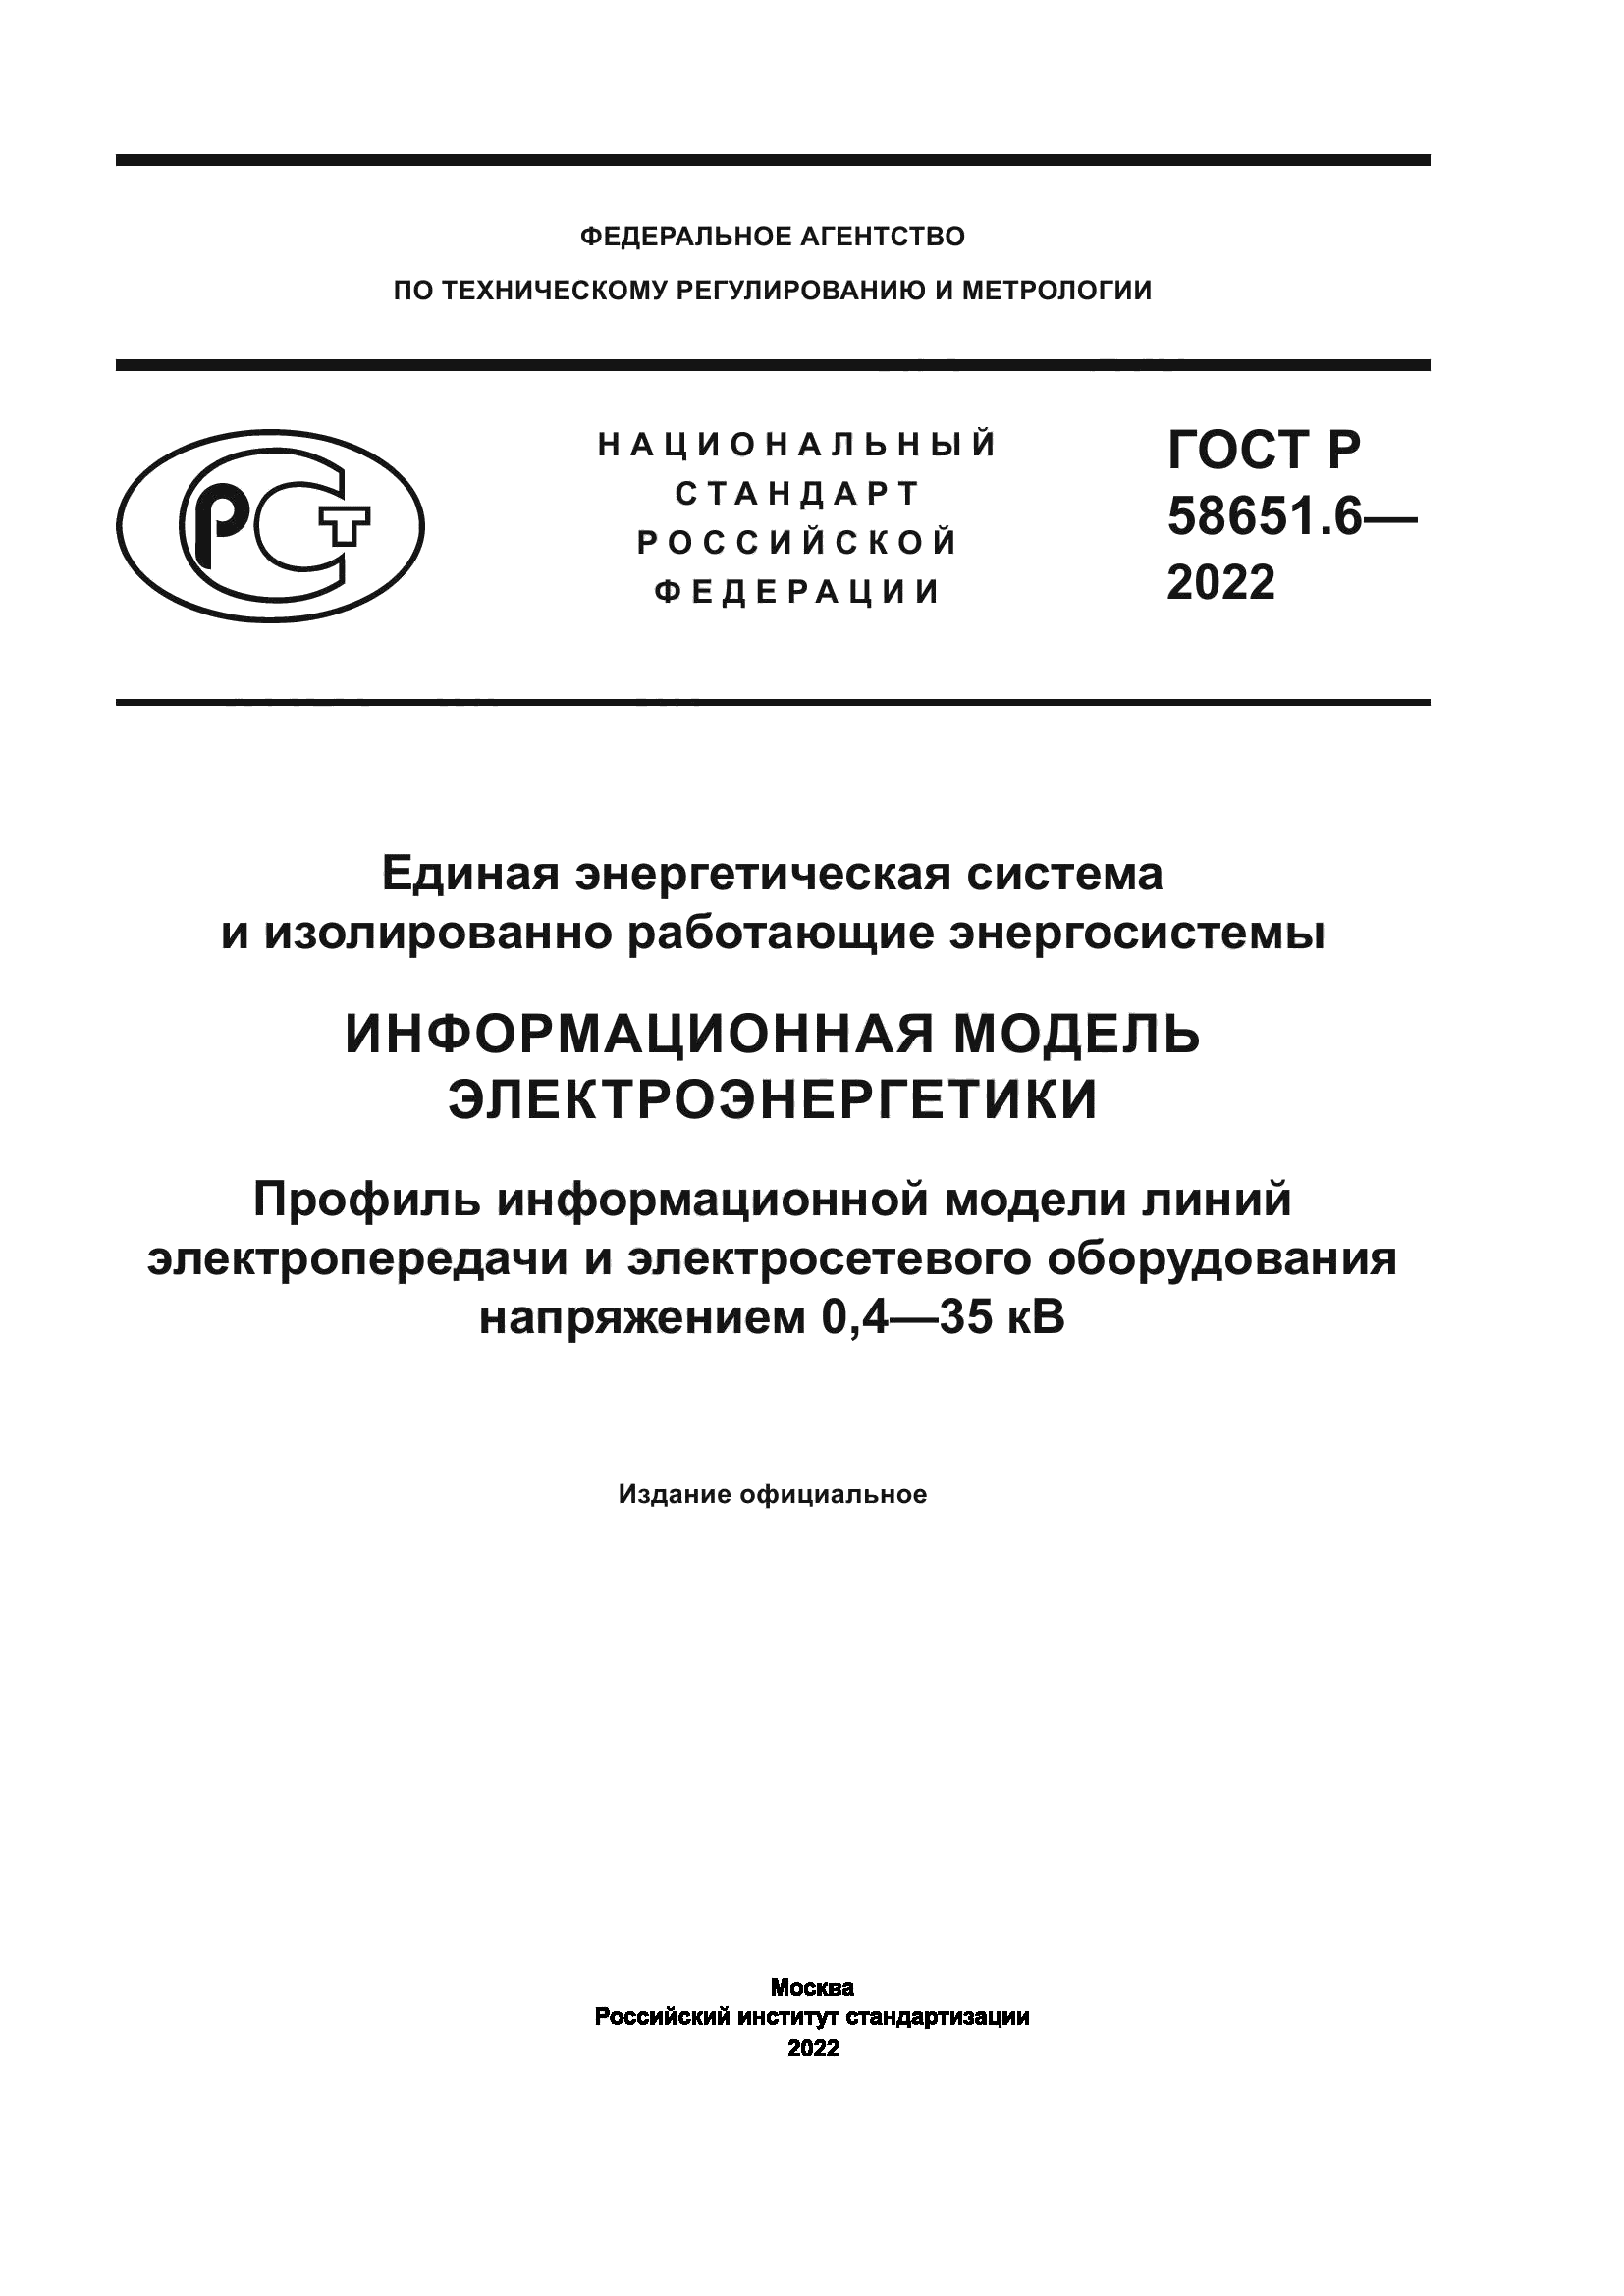 ГОСТ Р 58651.6-2022